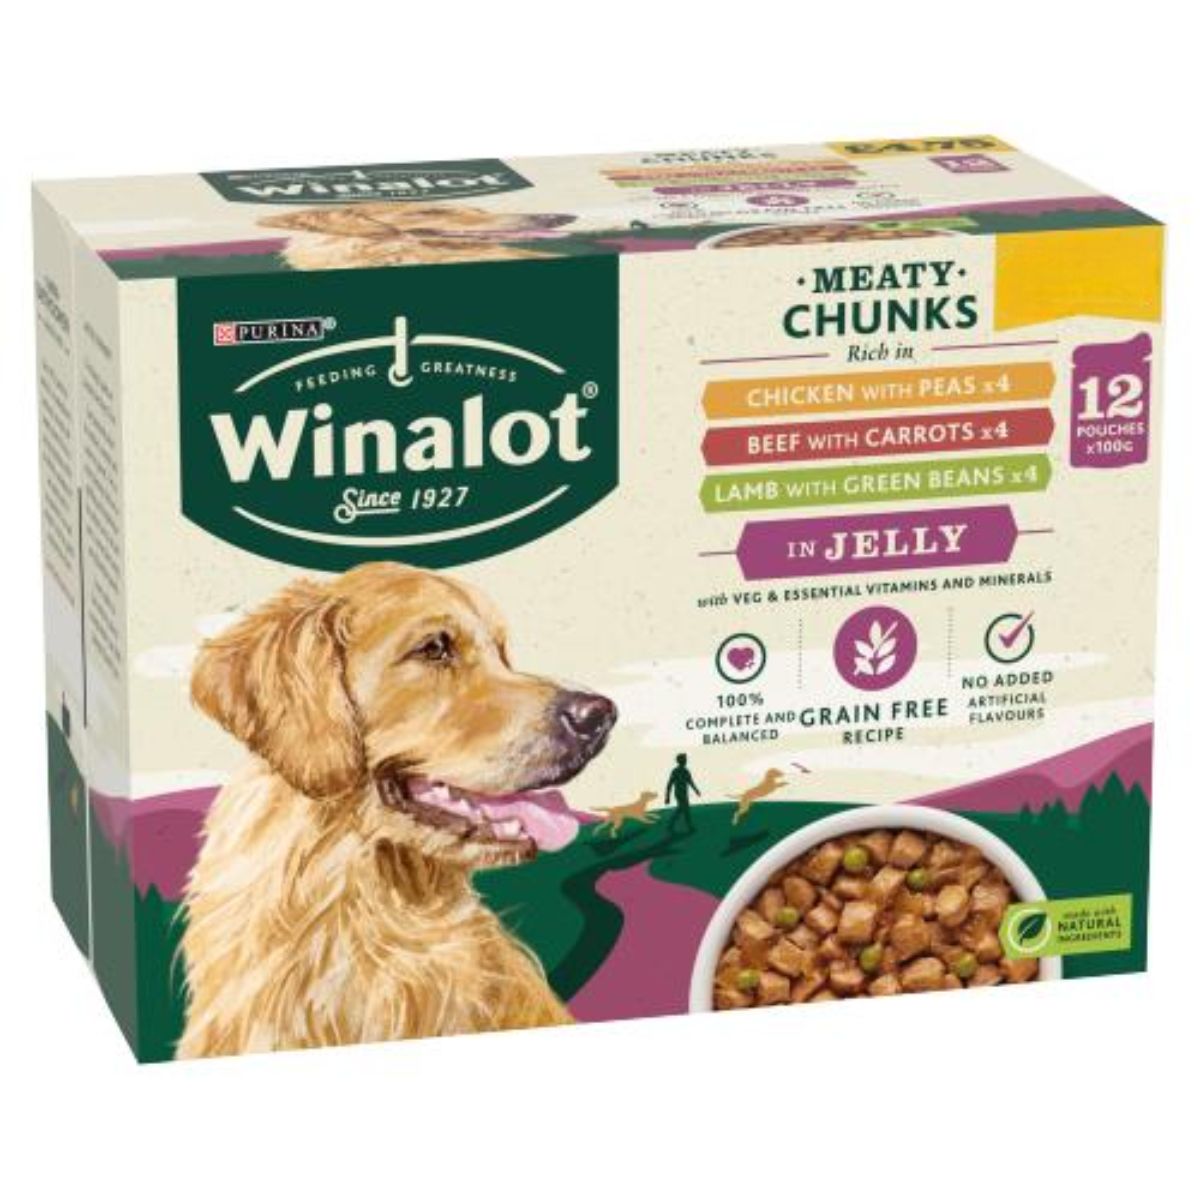 Purina - Winalot Meaty Chunks in Jelly - 12 x 100g dog food in a box.